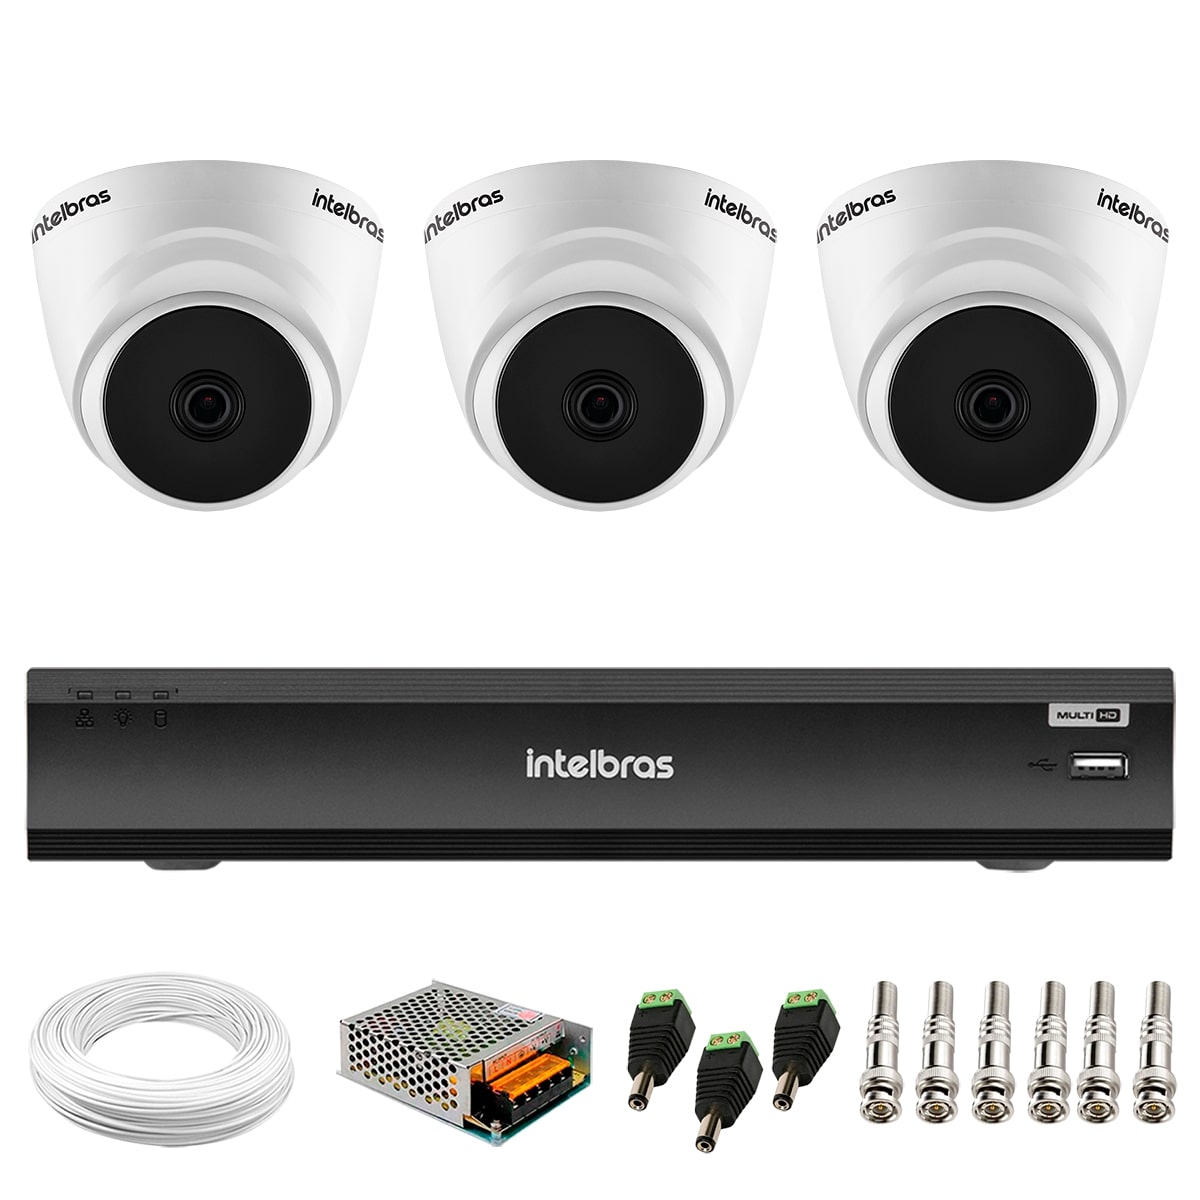 kit-intelbras-2-cameras-hd-720p-vhd-1120-d-g6-dvr-1104-intelbras-acessorios-hd-1tb-para-armazenamento-app-gratis-de-monitoramento01